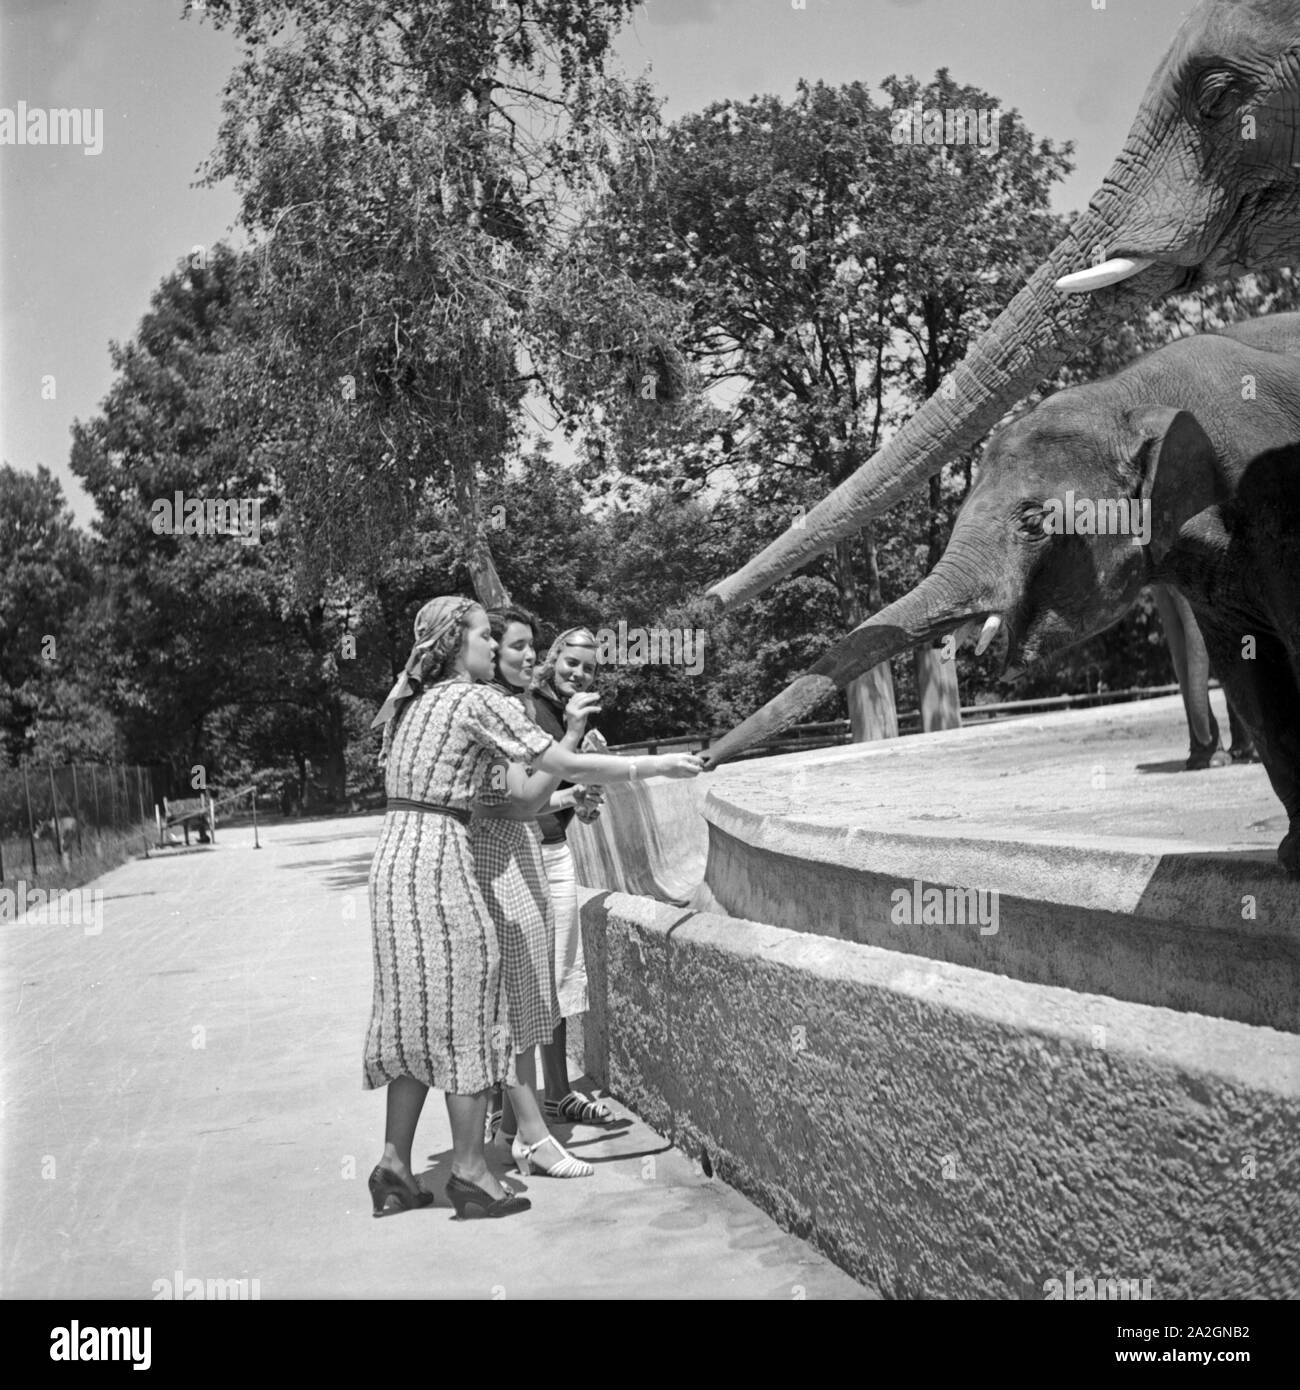 Drei junge Frauen verfüttern eine Erdnuß un Elefanten im Zoo, Deutschland 1930er Jahre. Tre giovani donne presso i giardini zoologici di alimentazione di arachidi per elefanti, Germania 1930s. Foto Stock